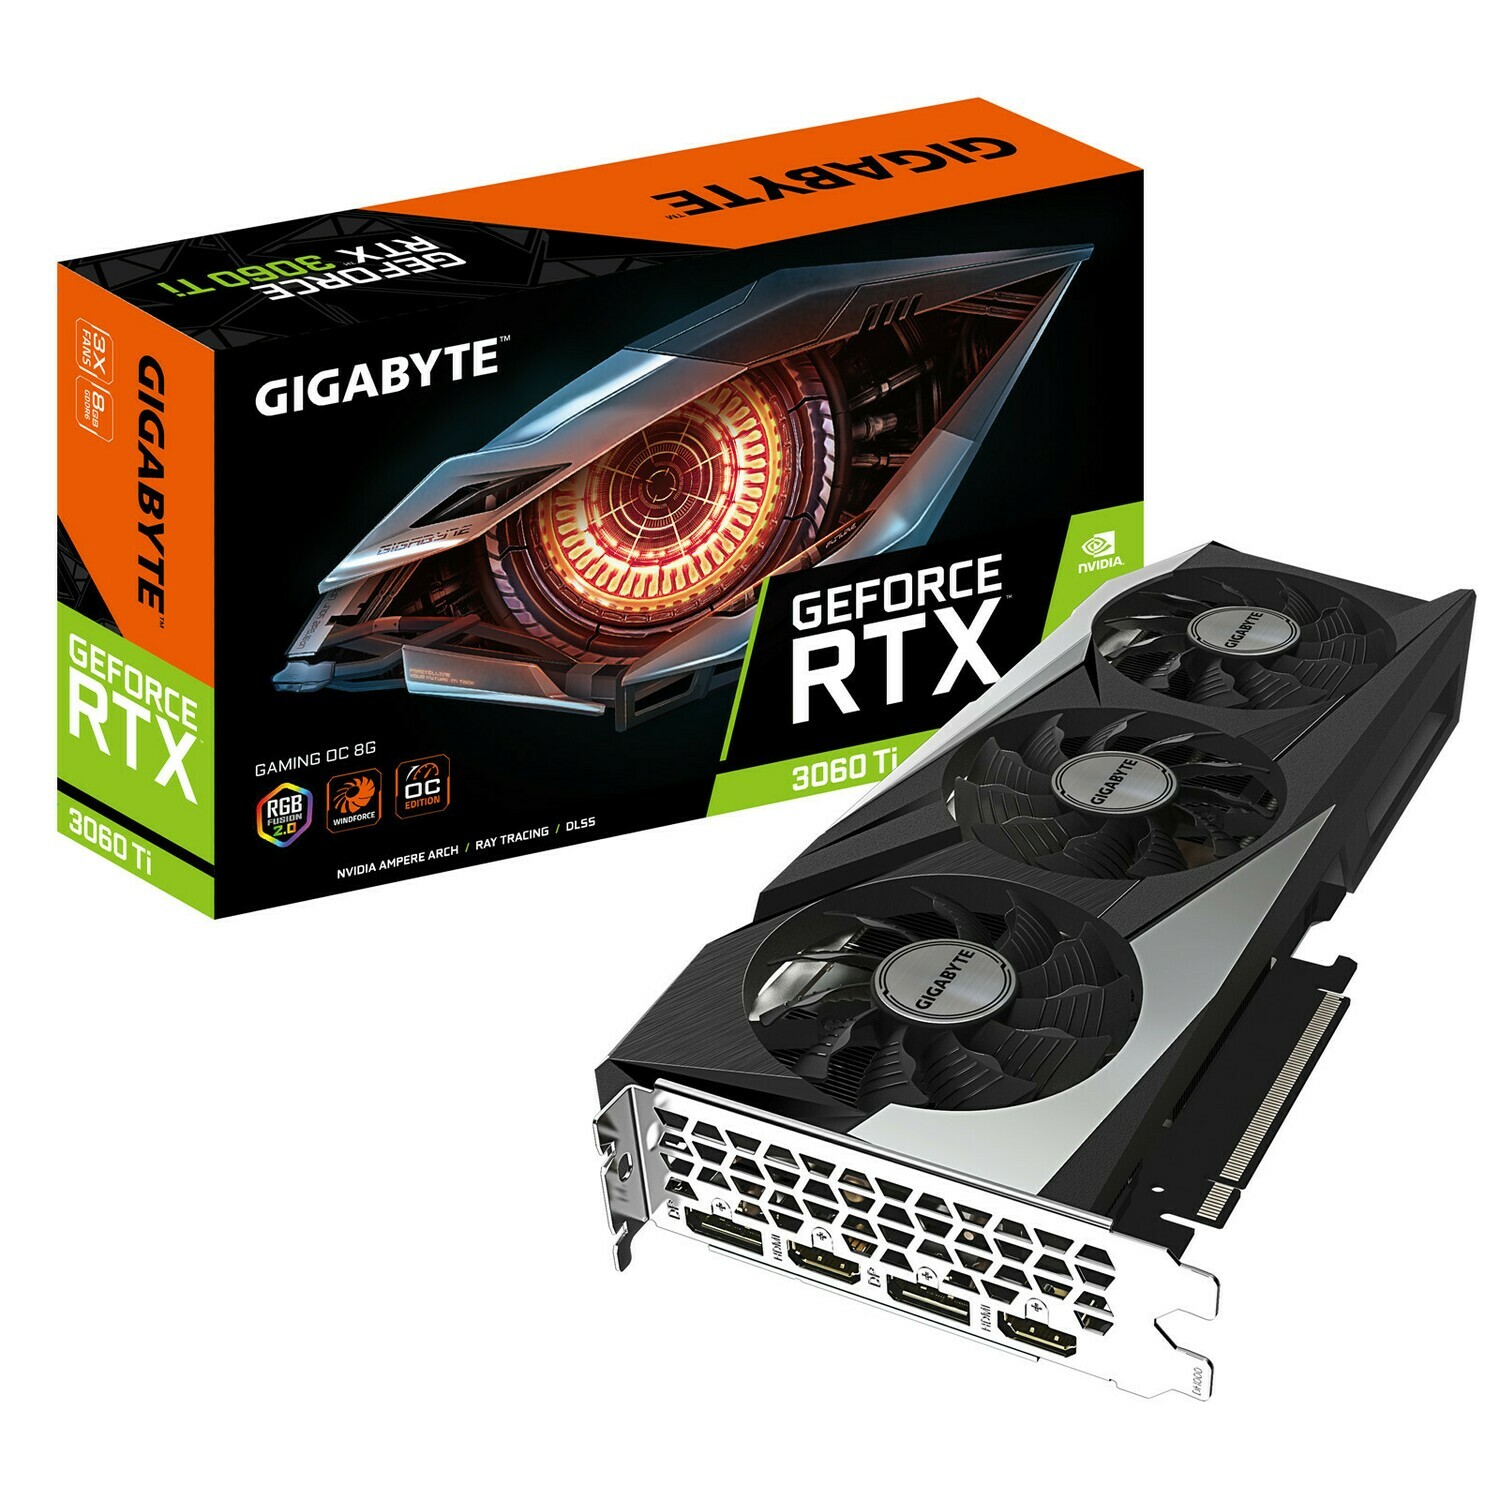 GIGABYTE GeForce RTX 3060 TI GAMING OC 8GB 256-Bit GDDR6 PCI Express 4.0 HDCP Ready Video Card